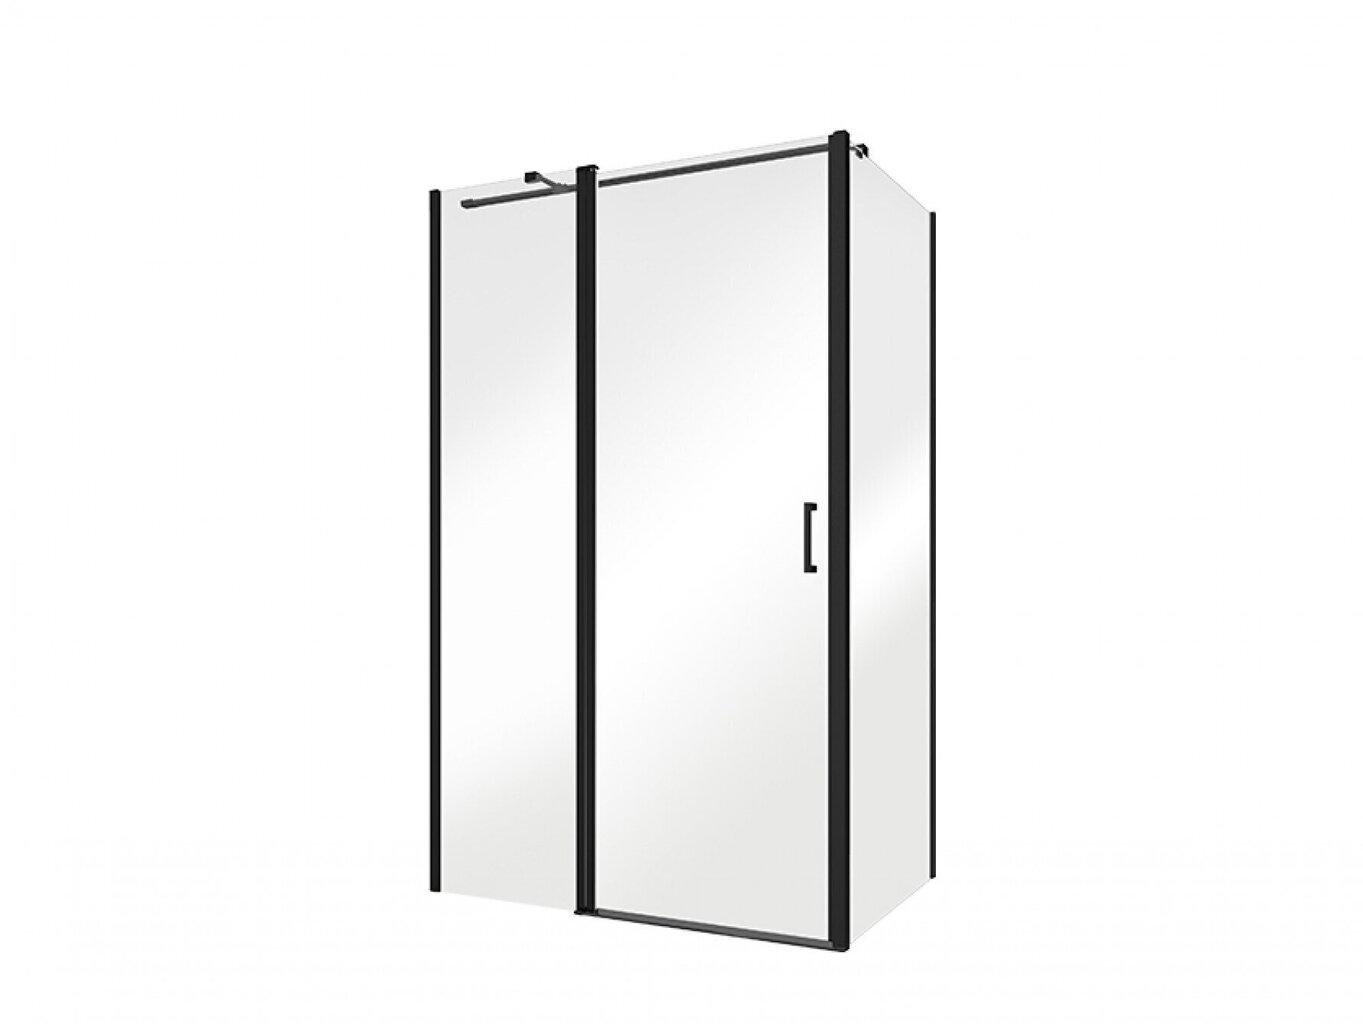 Dušas kabīne Besco Exo-CH Black, 110x80,90,100 cm цена и информация | Dušas kabīnes | 220.lv